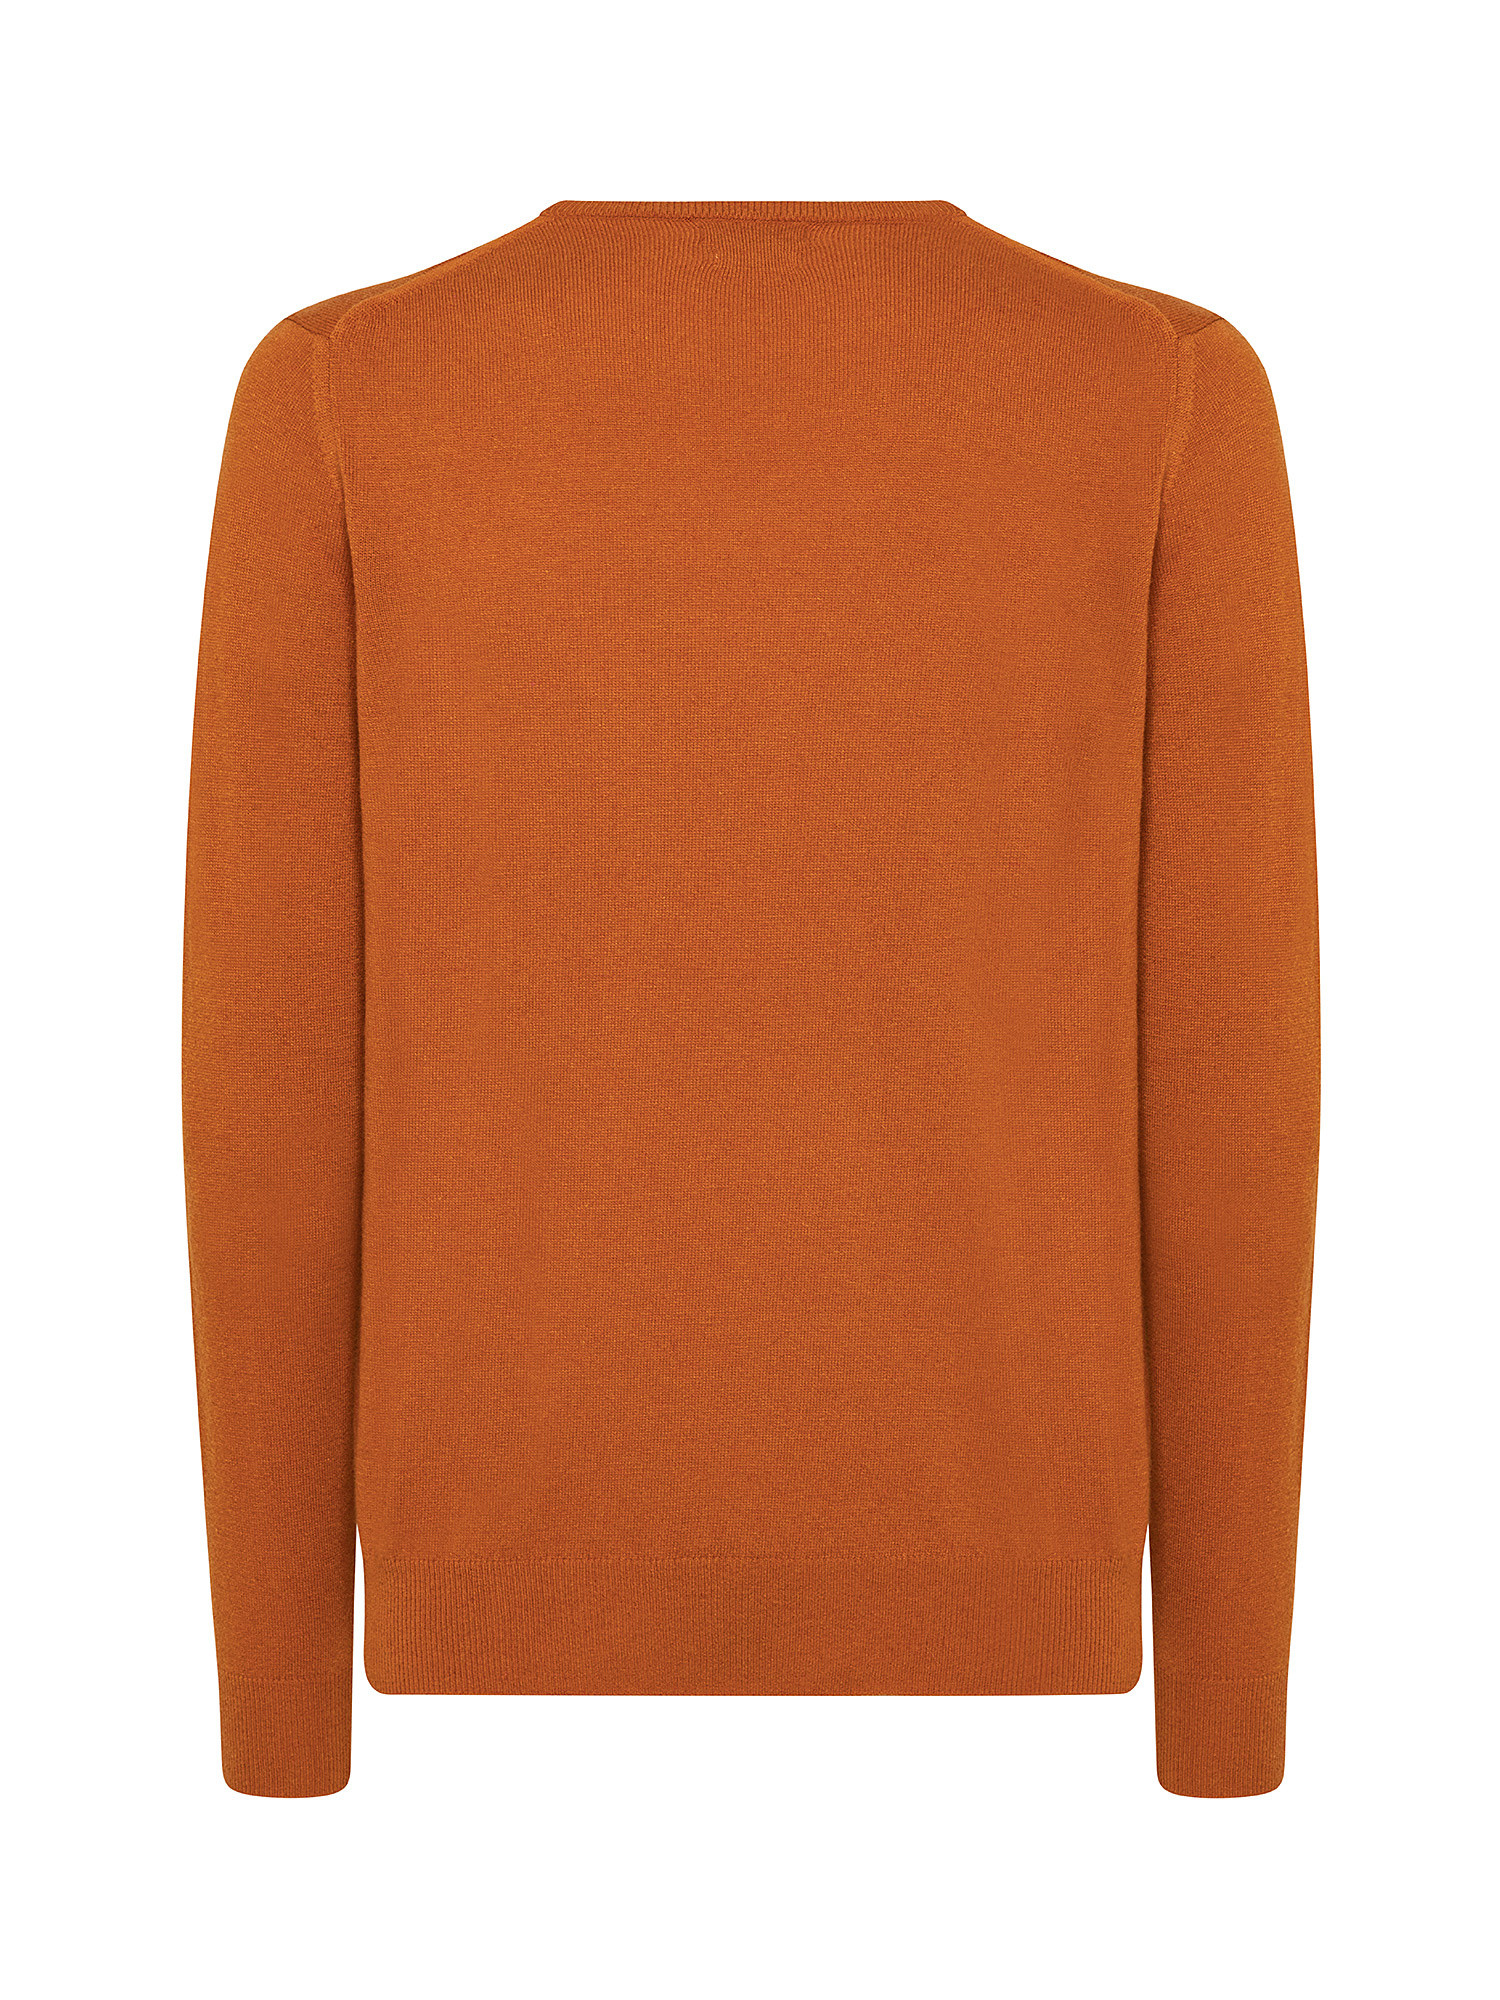 Cashmere Blend crewneck sweater with noble fibers, Orange, large image number 1